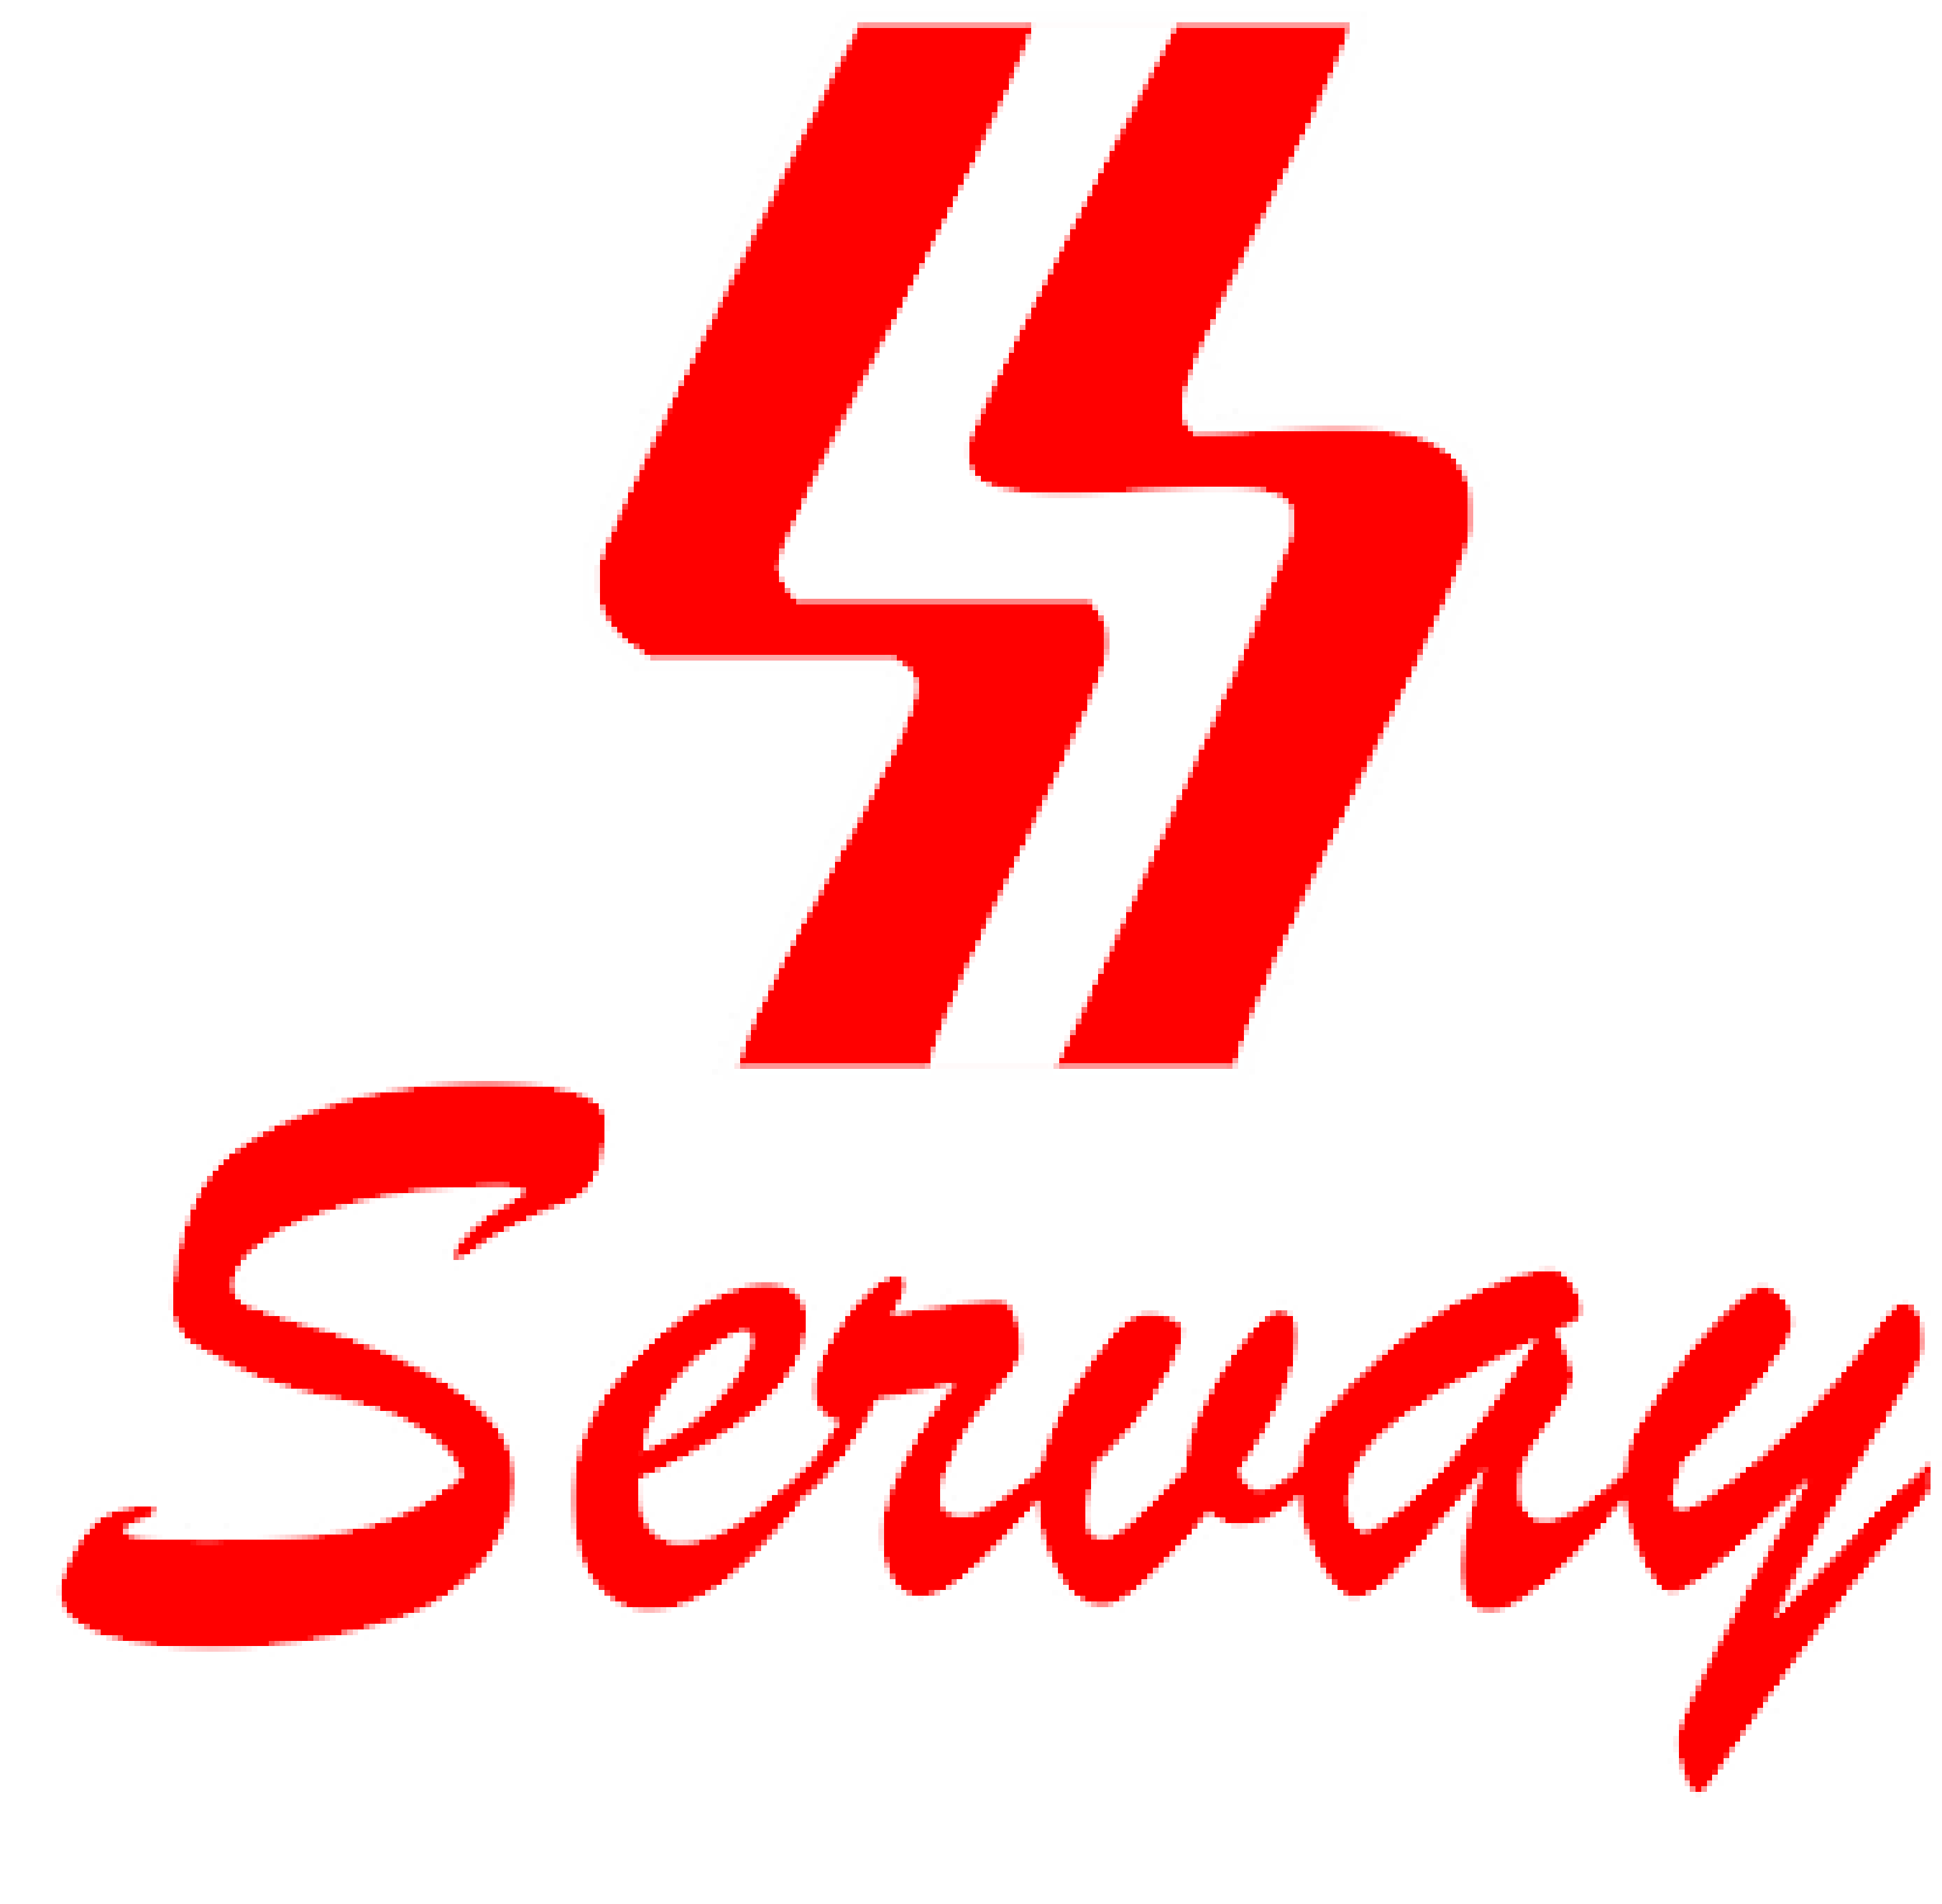 Servay